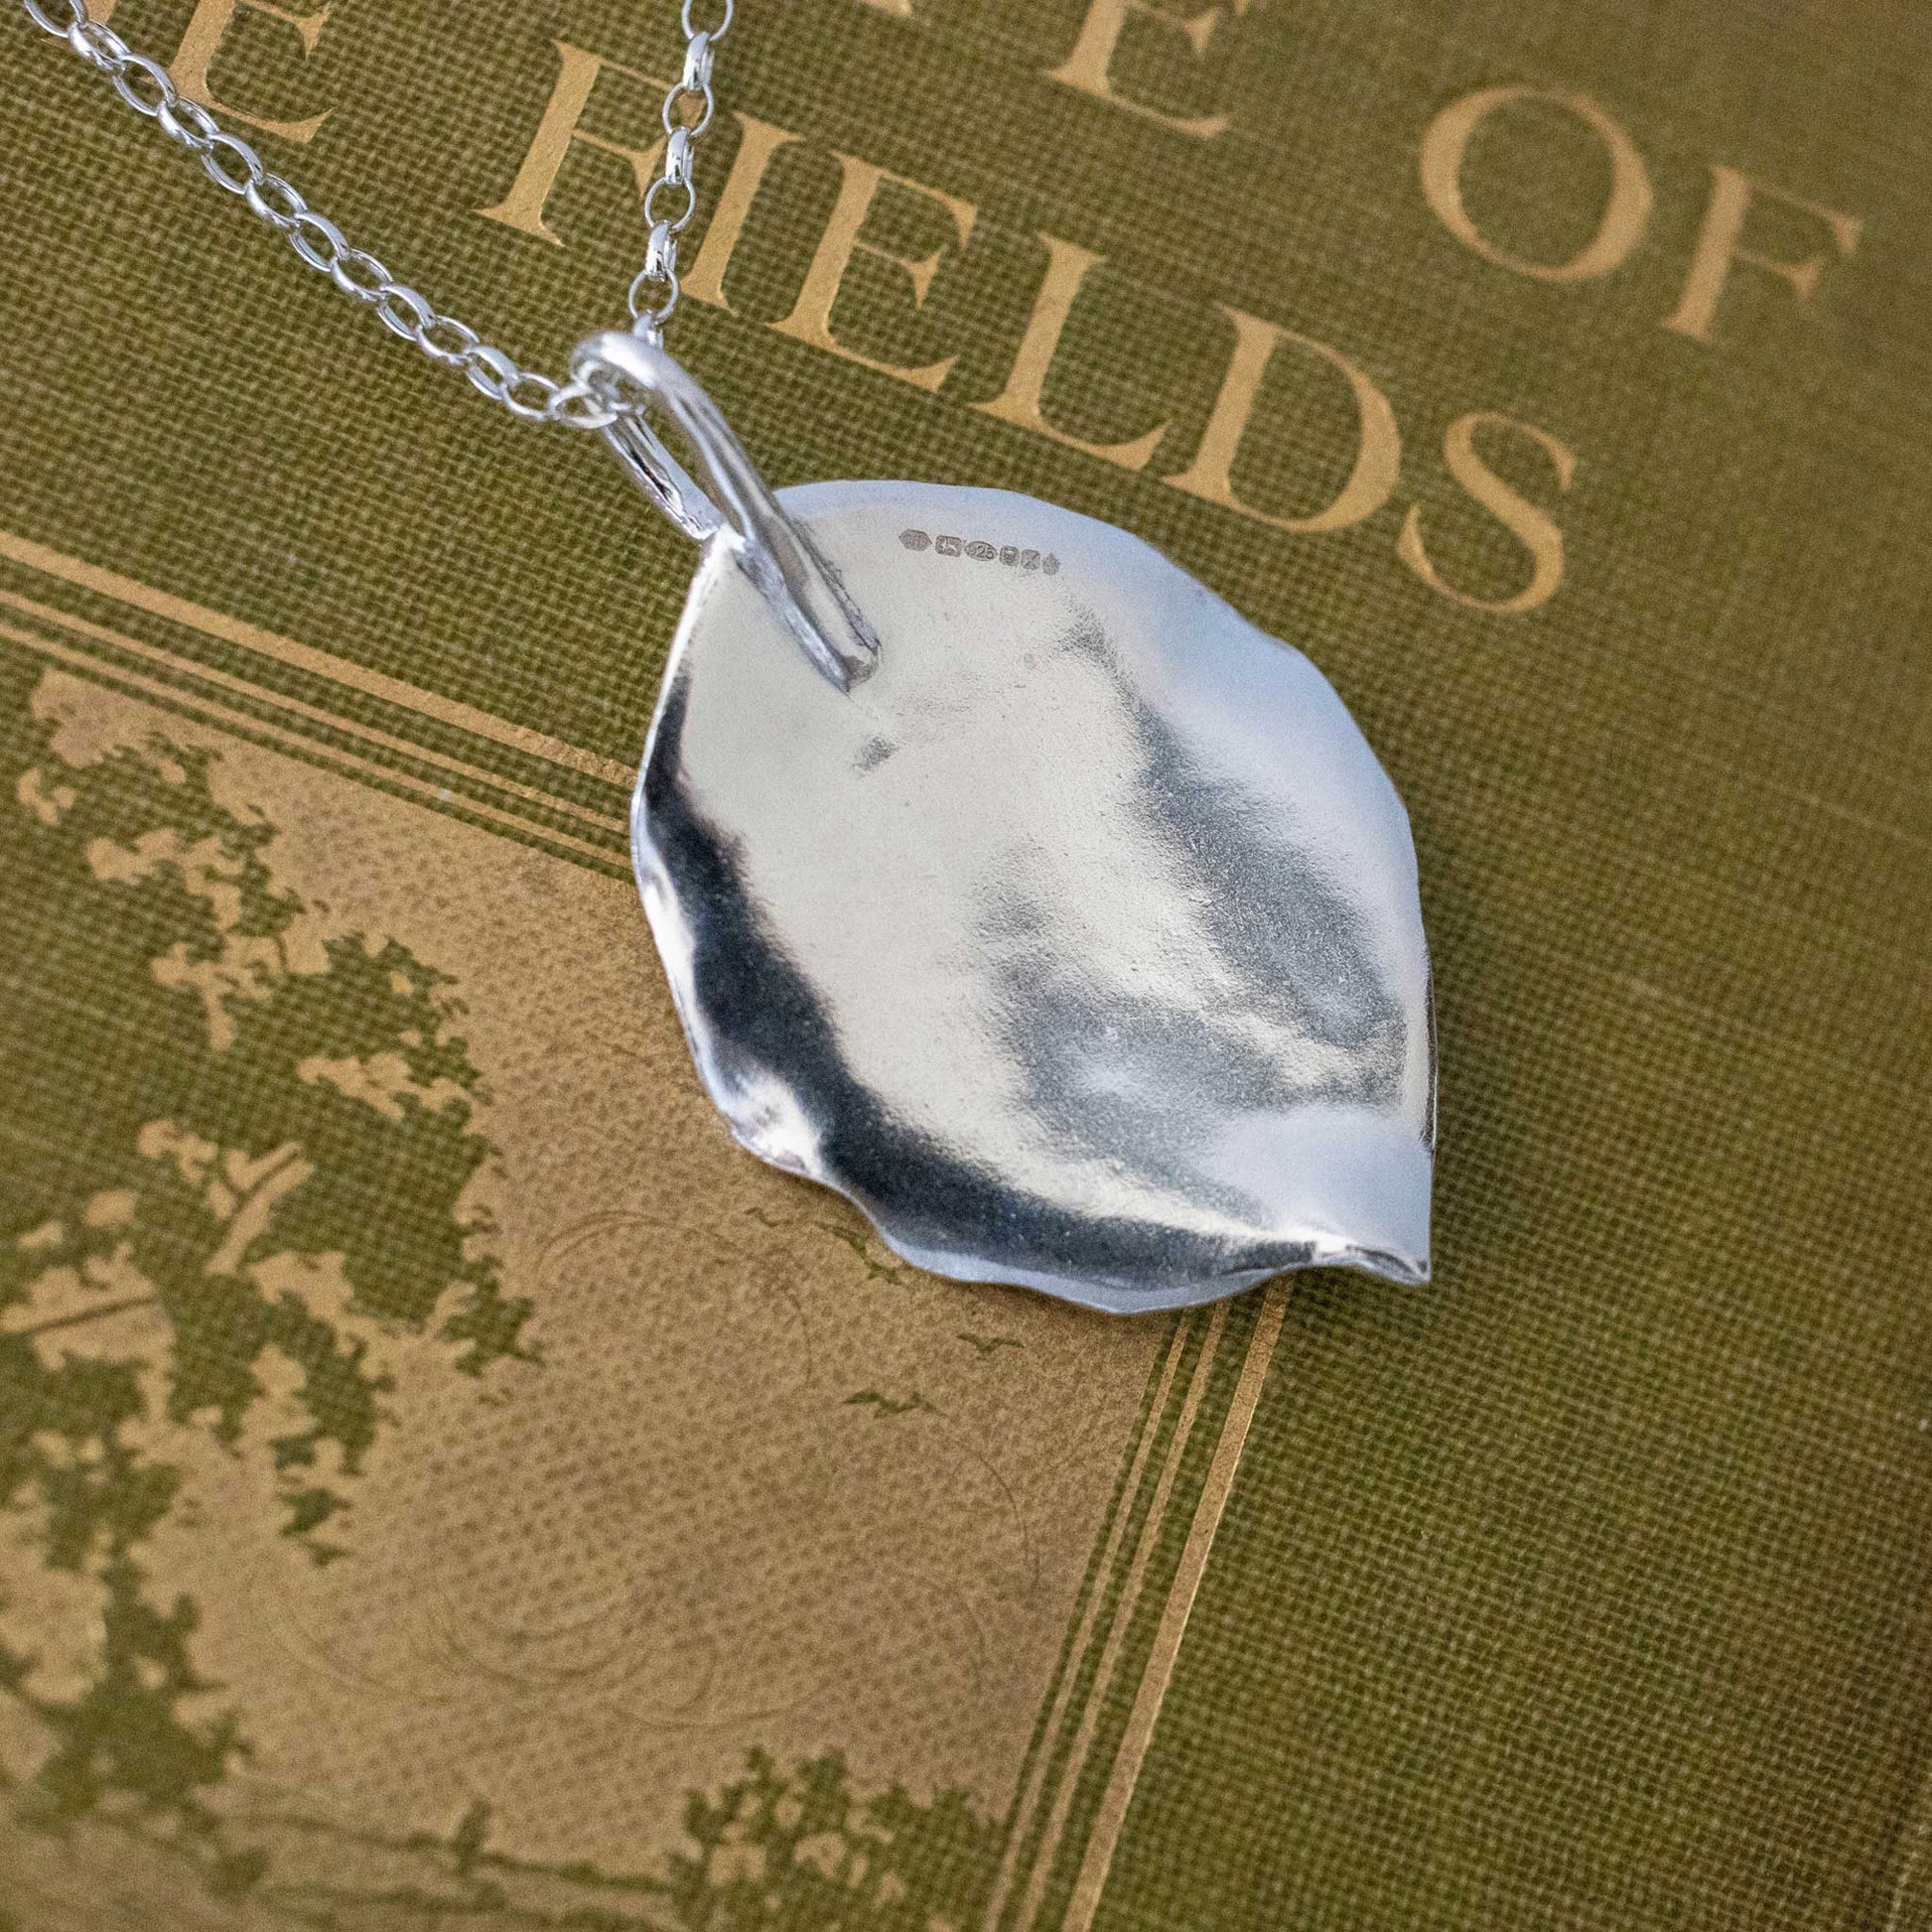 Large Beech pendant showing hallmark